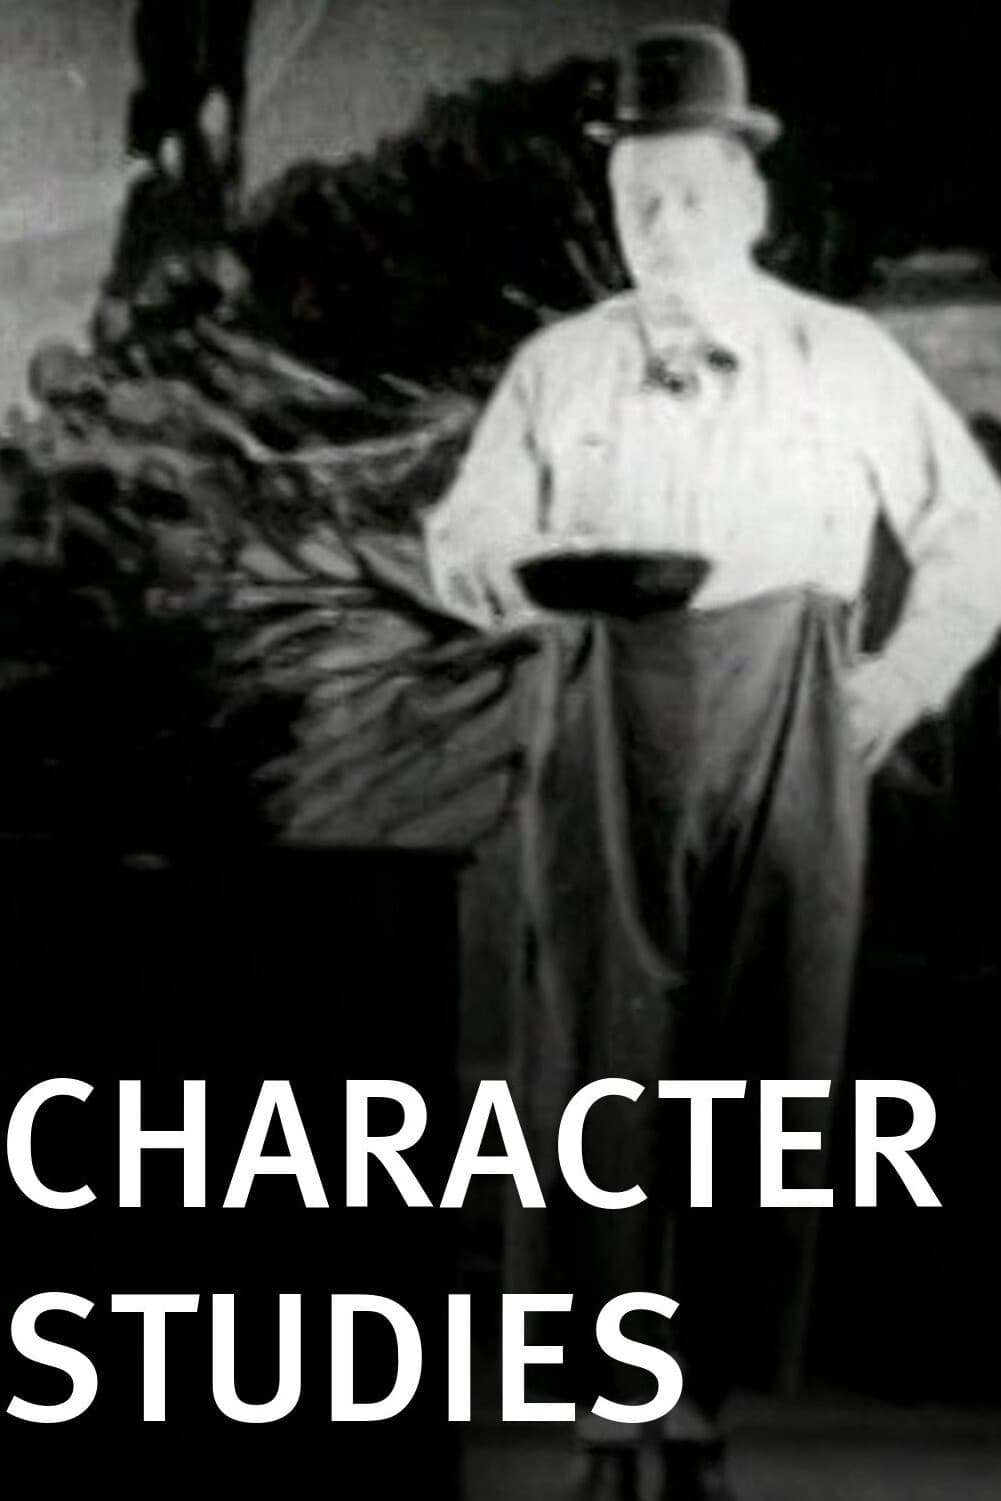 Character Studies